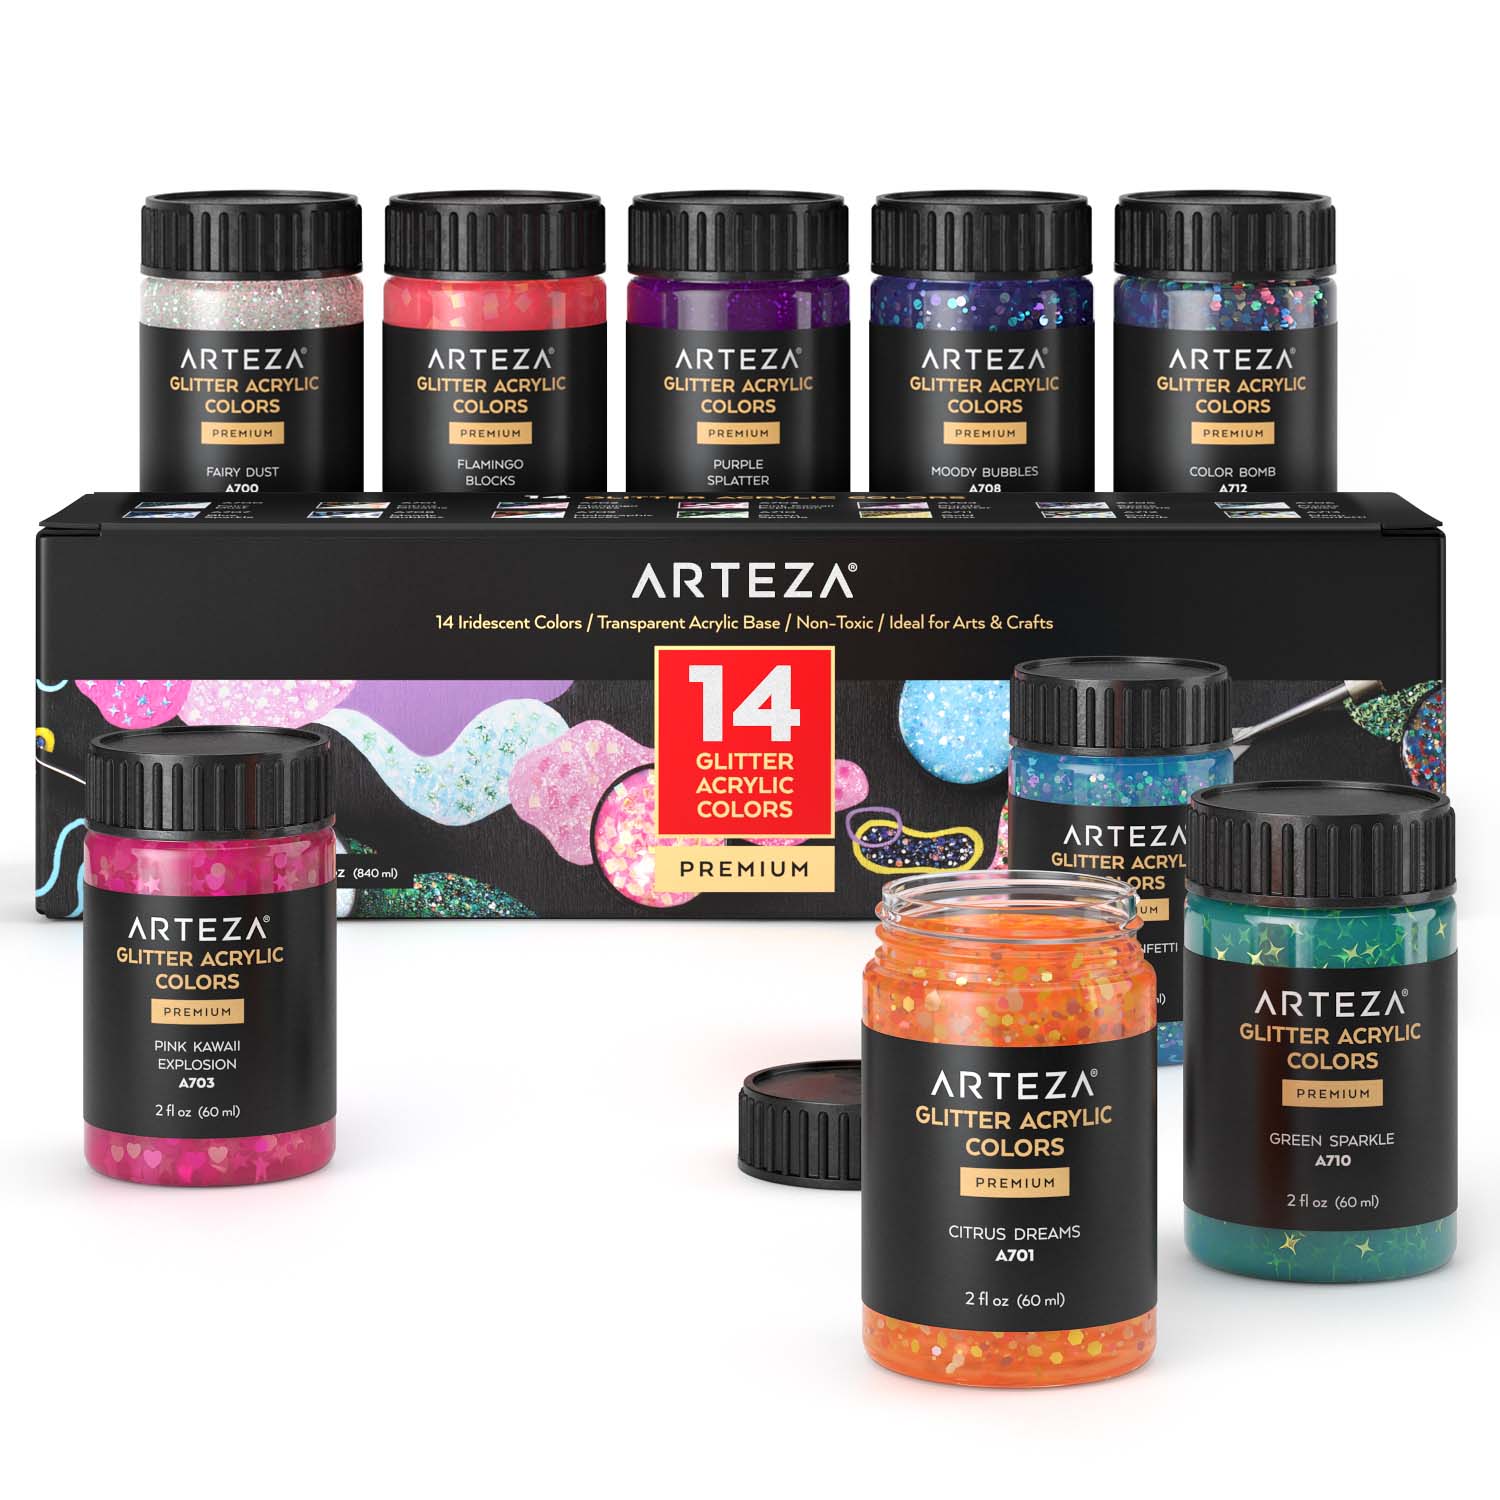 Arteza Iridescent Acrylic Paint, Dreamer Tones, 60 ml Bottles Set- 10 Pack